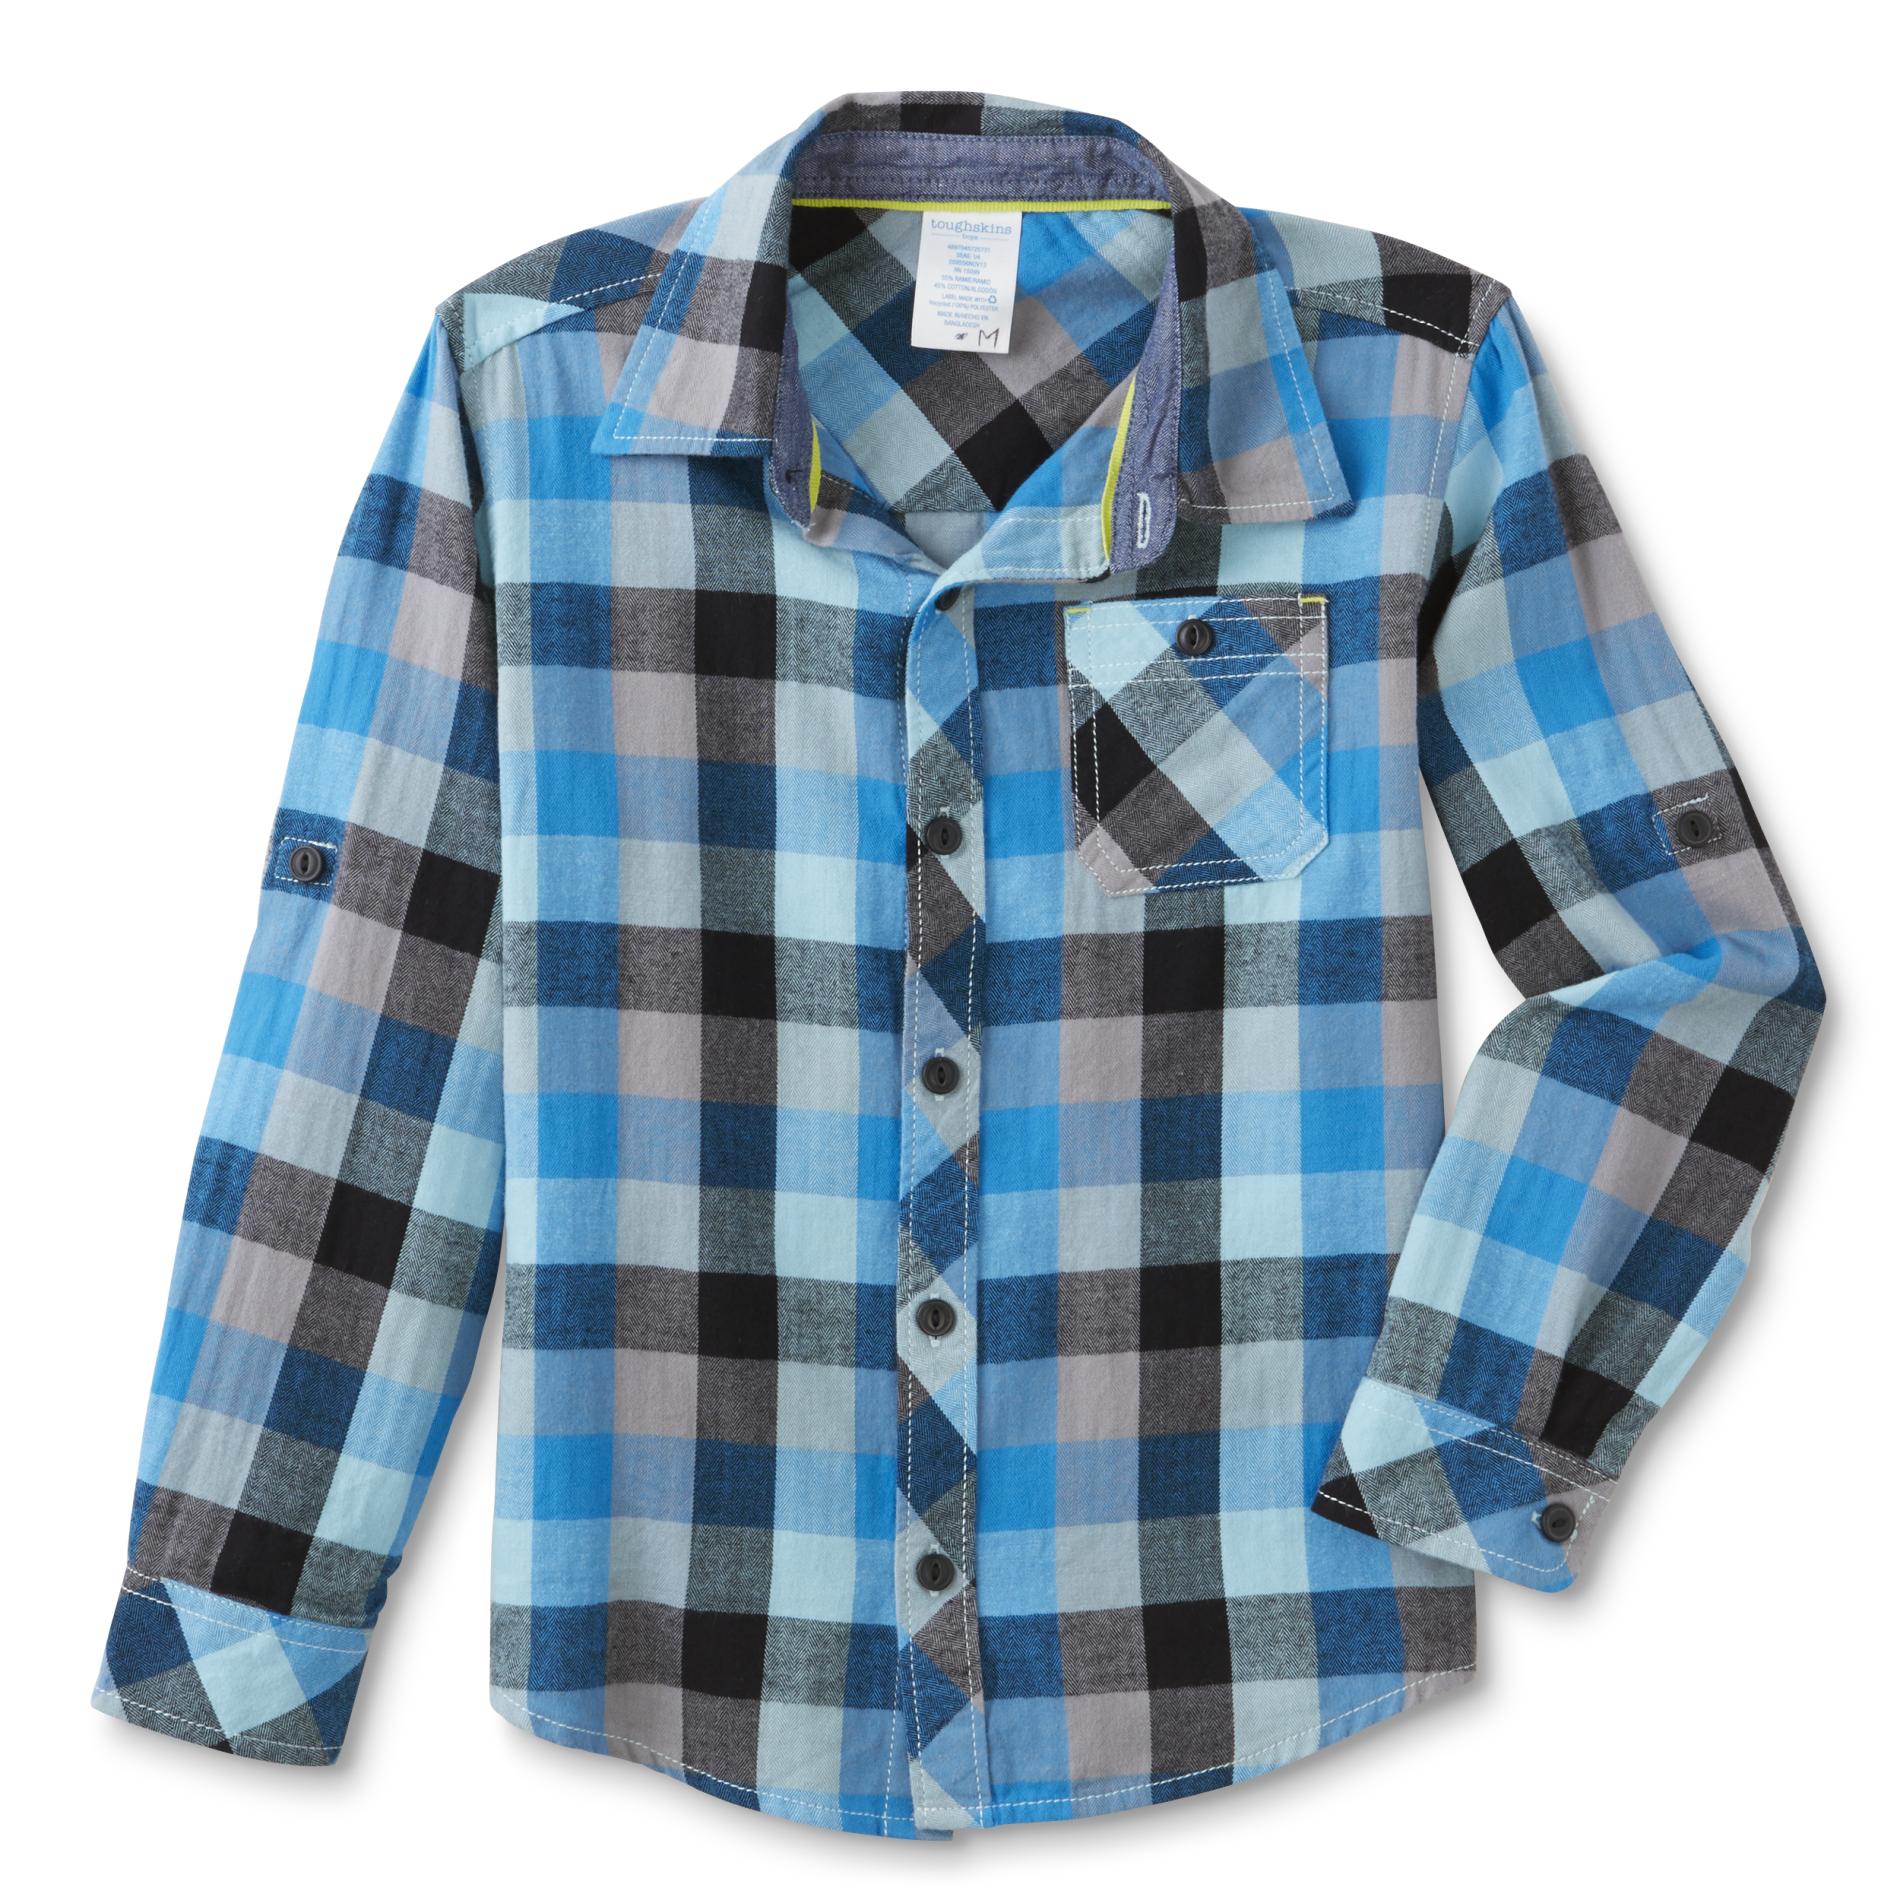 Toughskins Infant & Toddler Boy's Flannel Shirt - Plaid